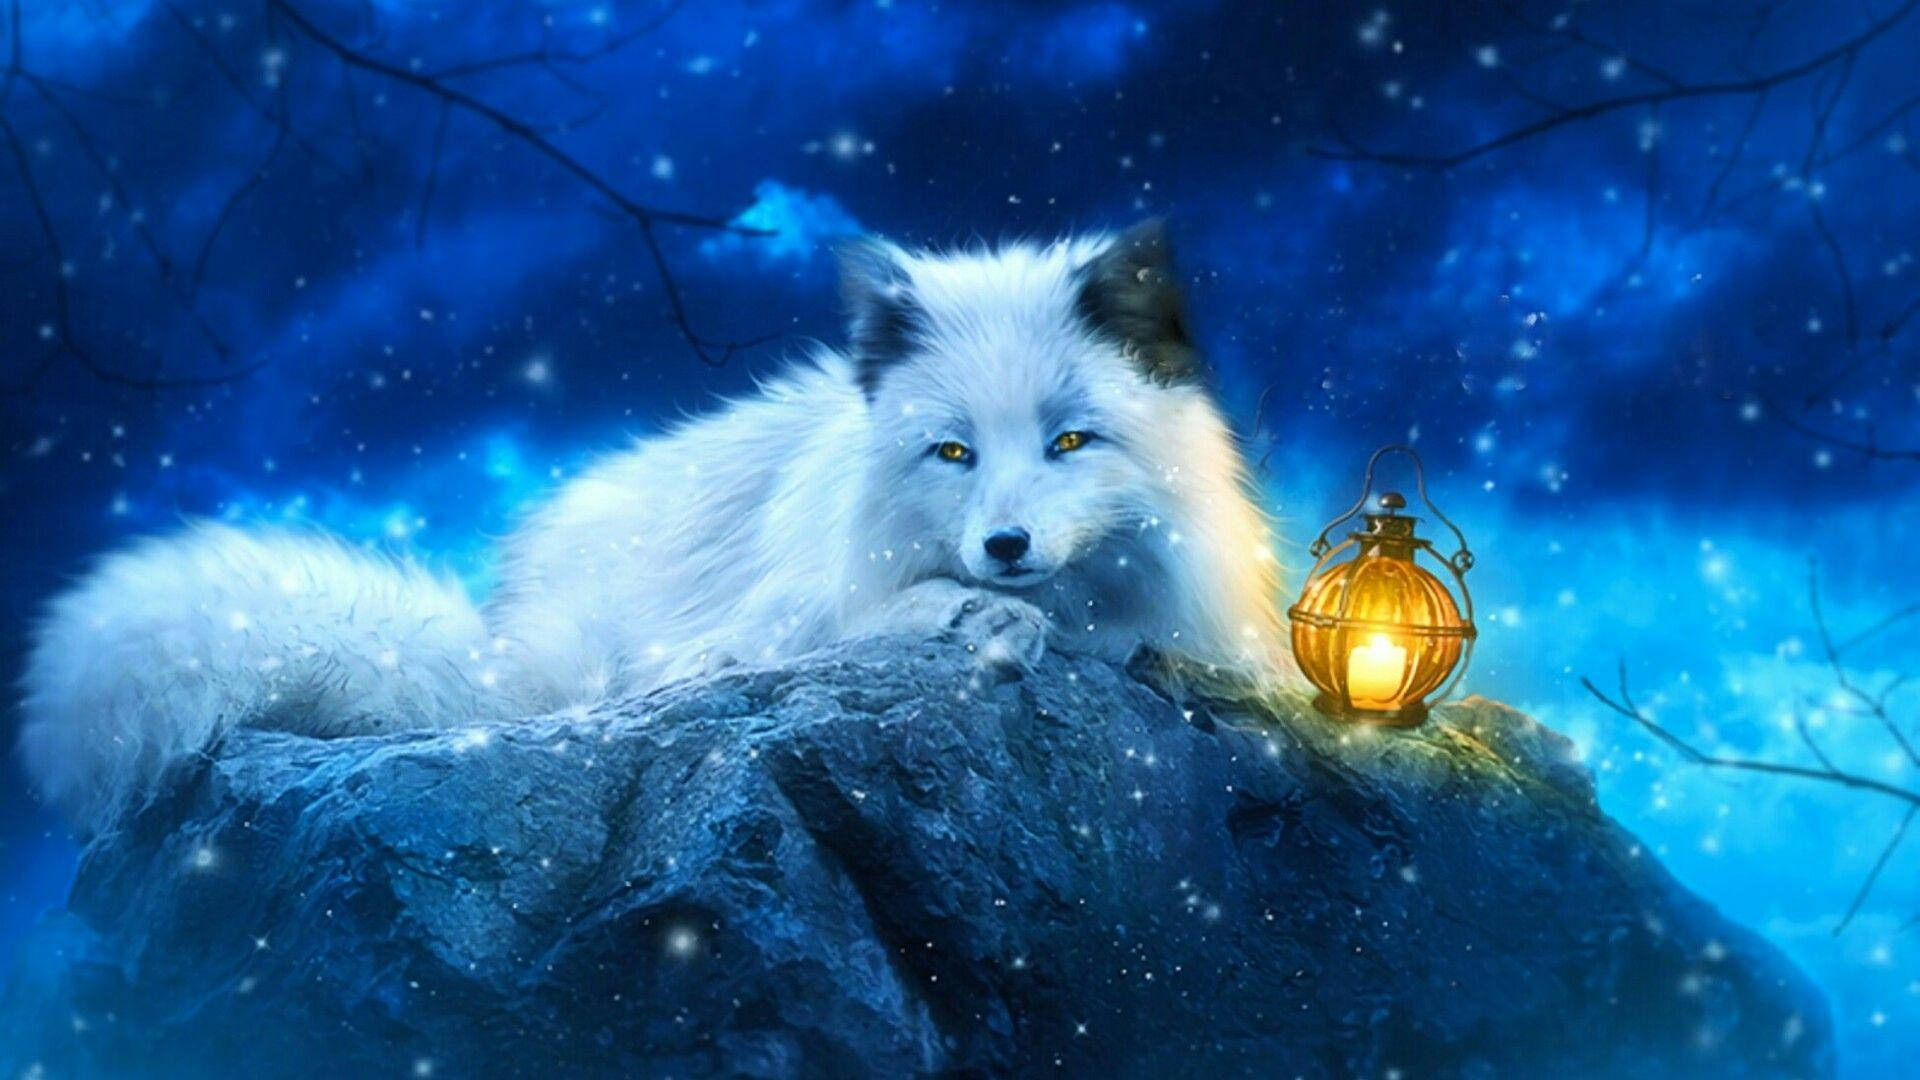 White Fox Digital Art Background